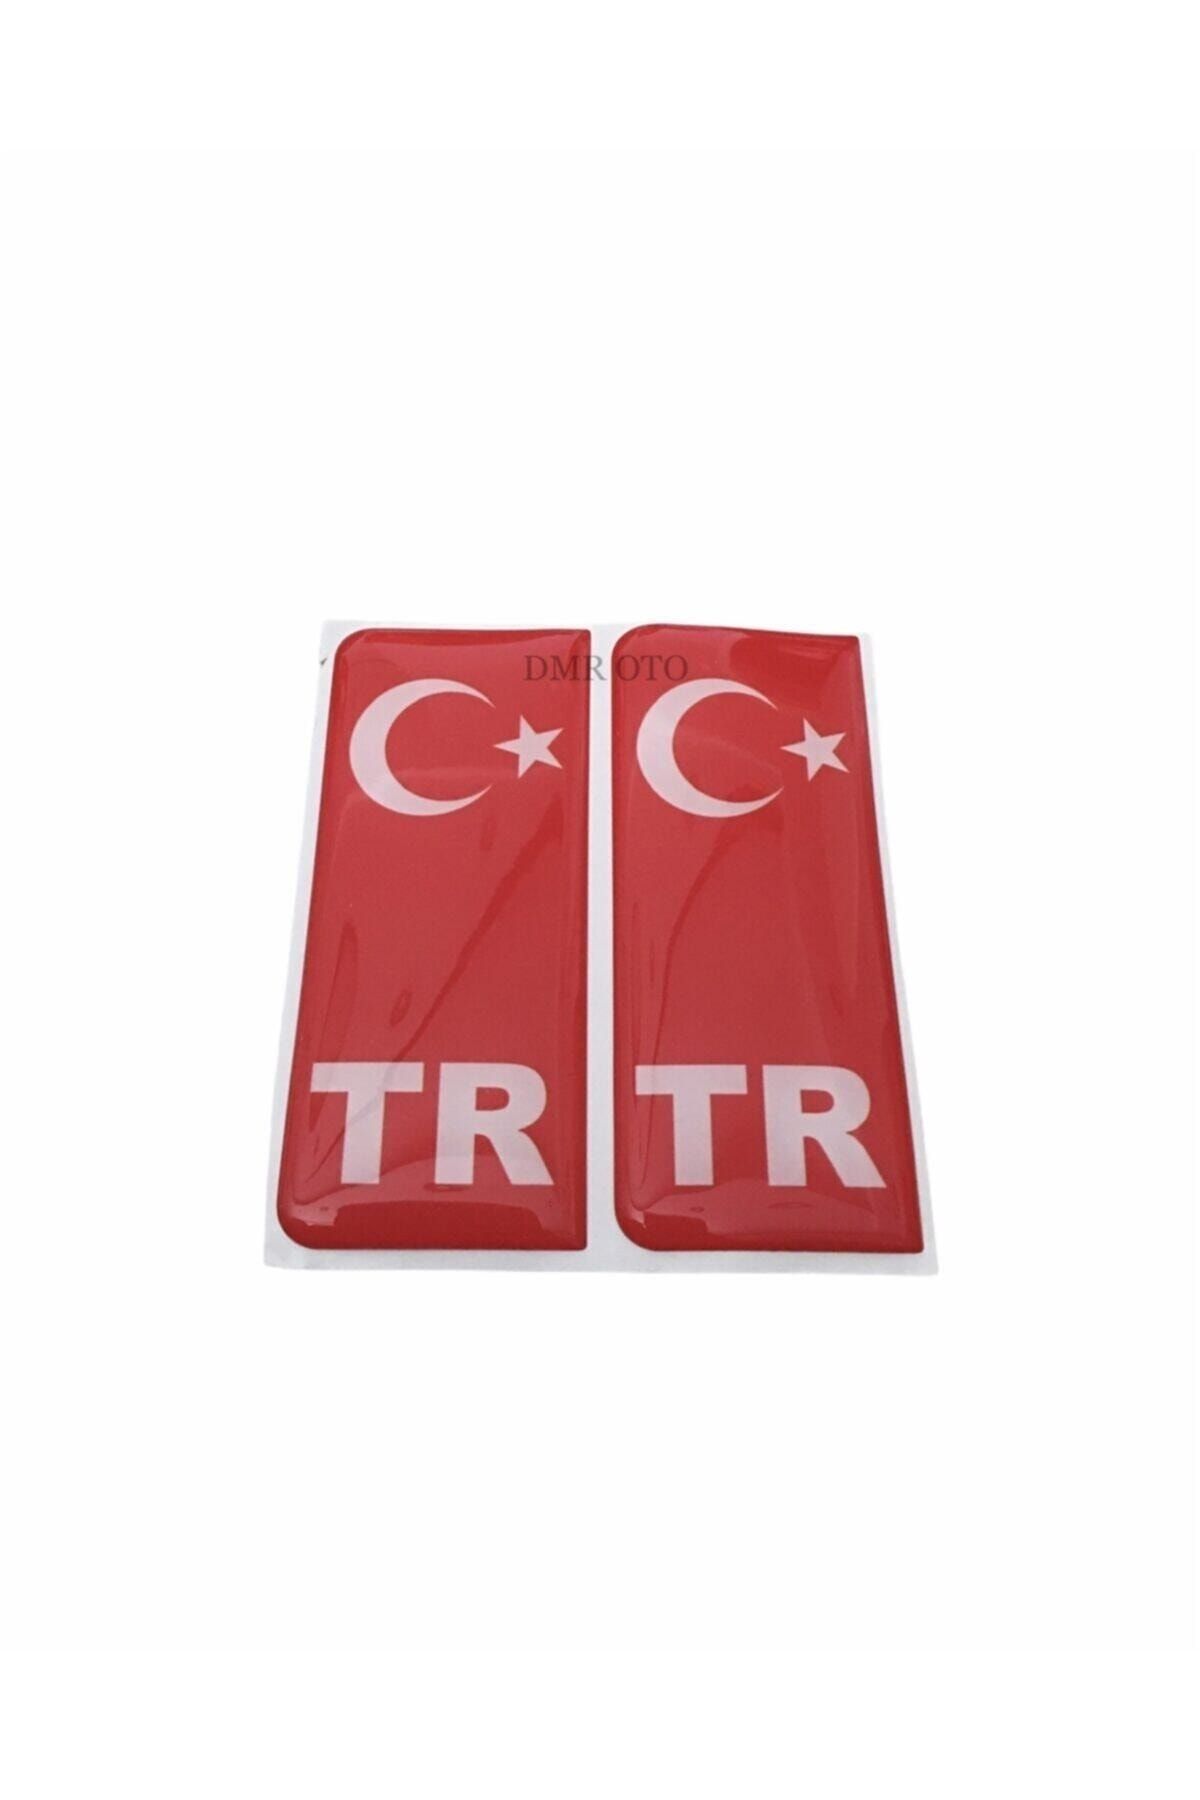 DMR Türk Bayrağı Plaka Damla Sticker Su Geçirmez Solmaz 2 Adet